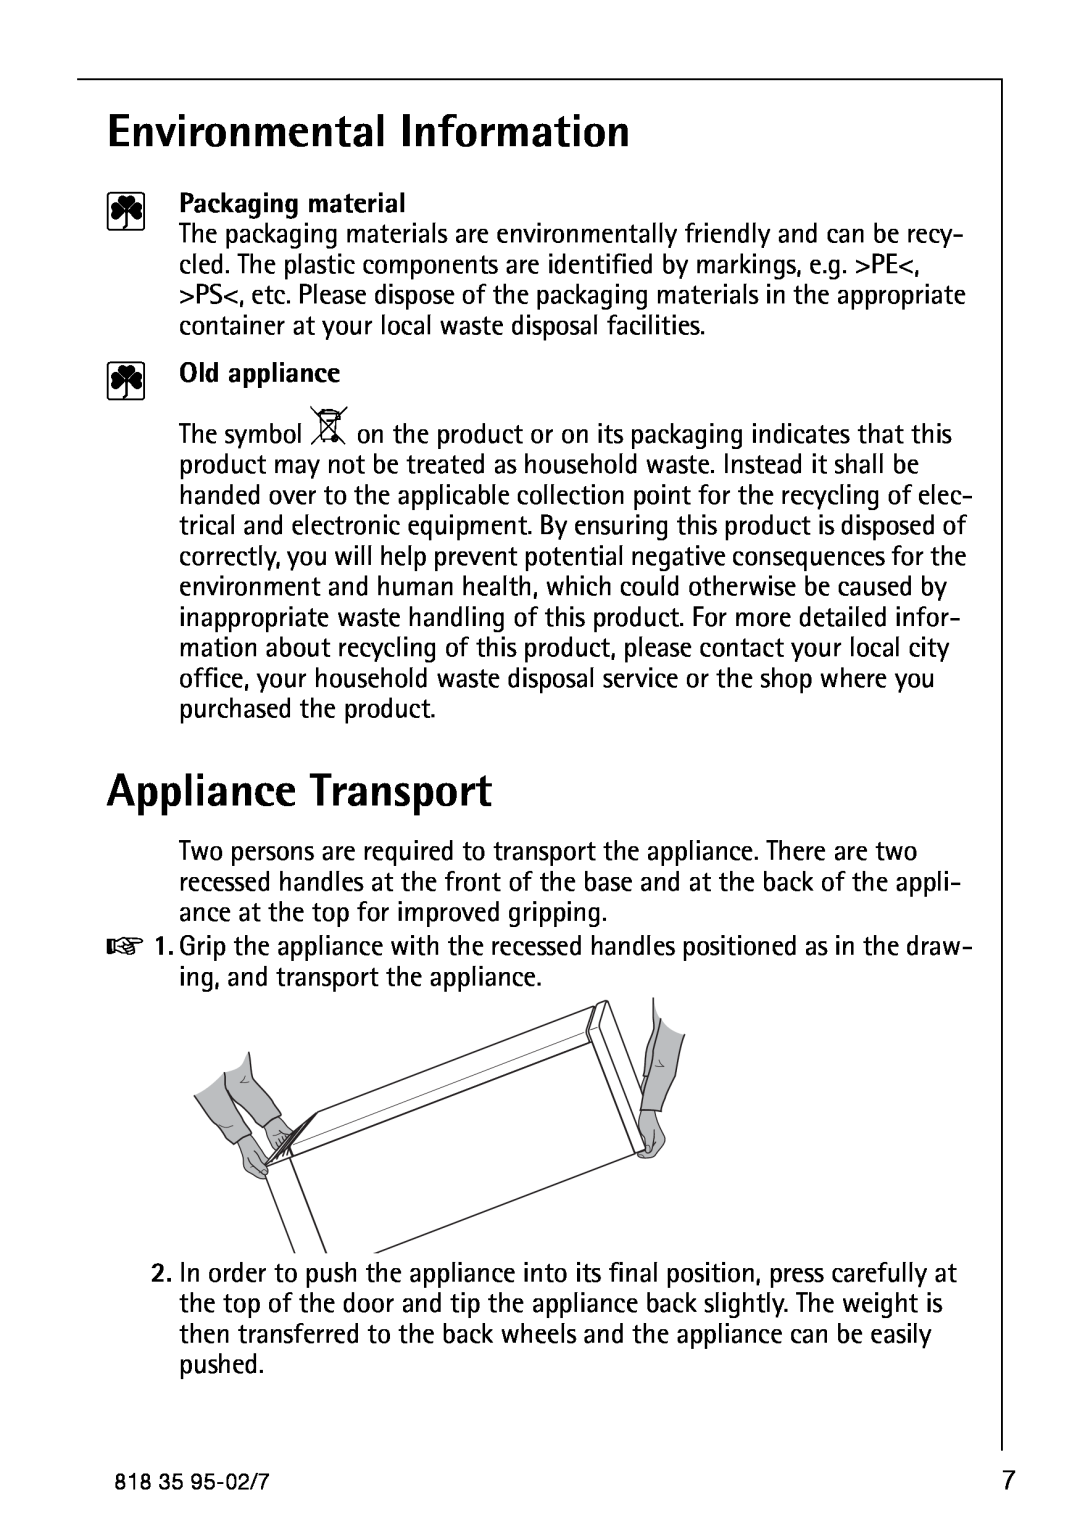 AEG 75248 GA3 manual Environmental Information, Appliance Transport, Packaging material, Old appliance 